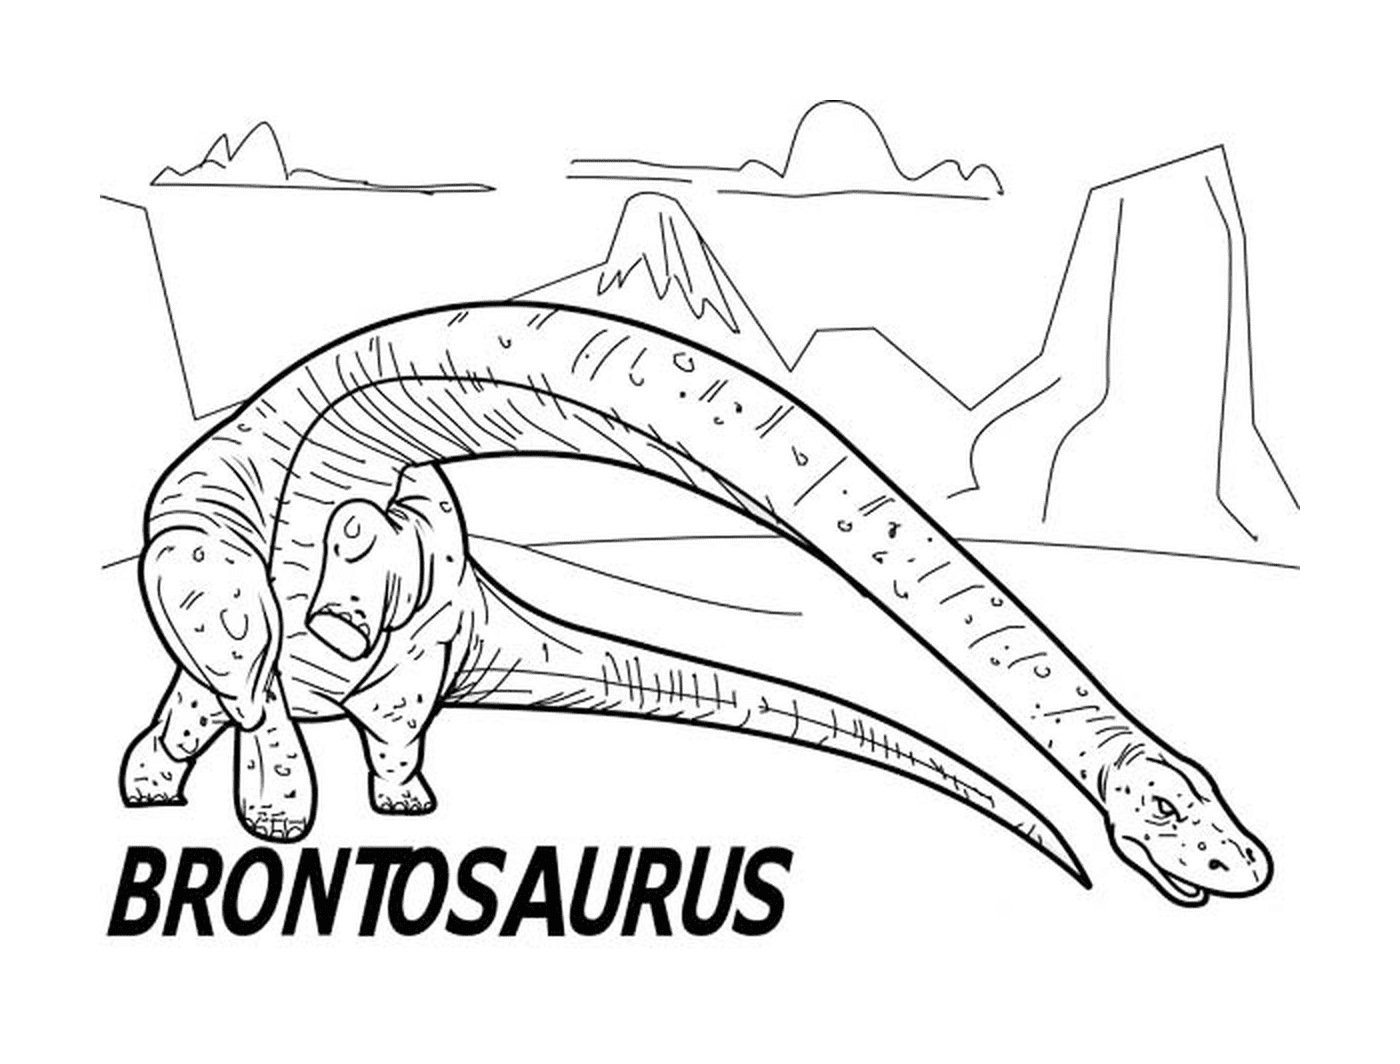  Brontosaurus of Jurassic, encounter with dinosaurs 